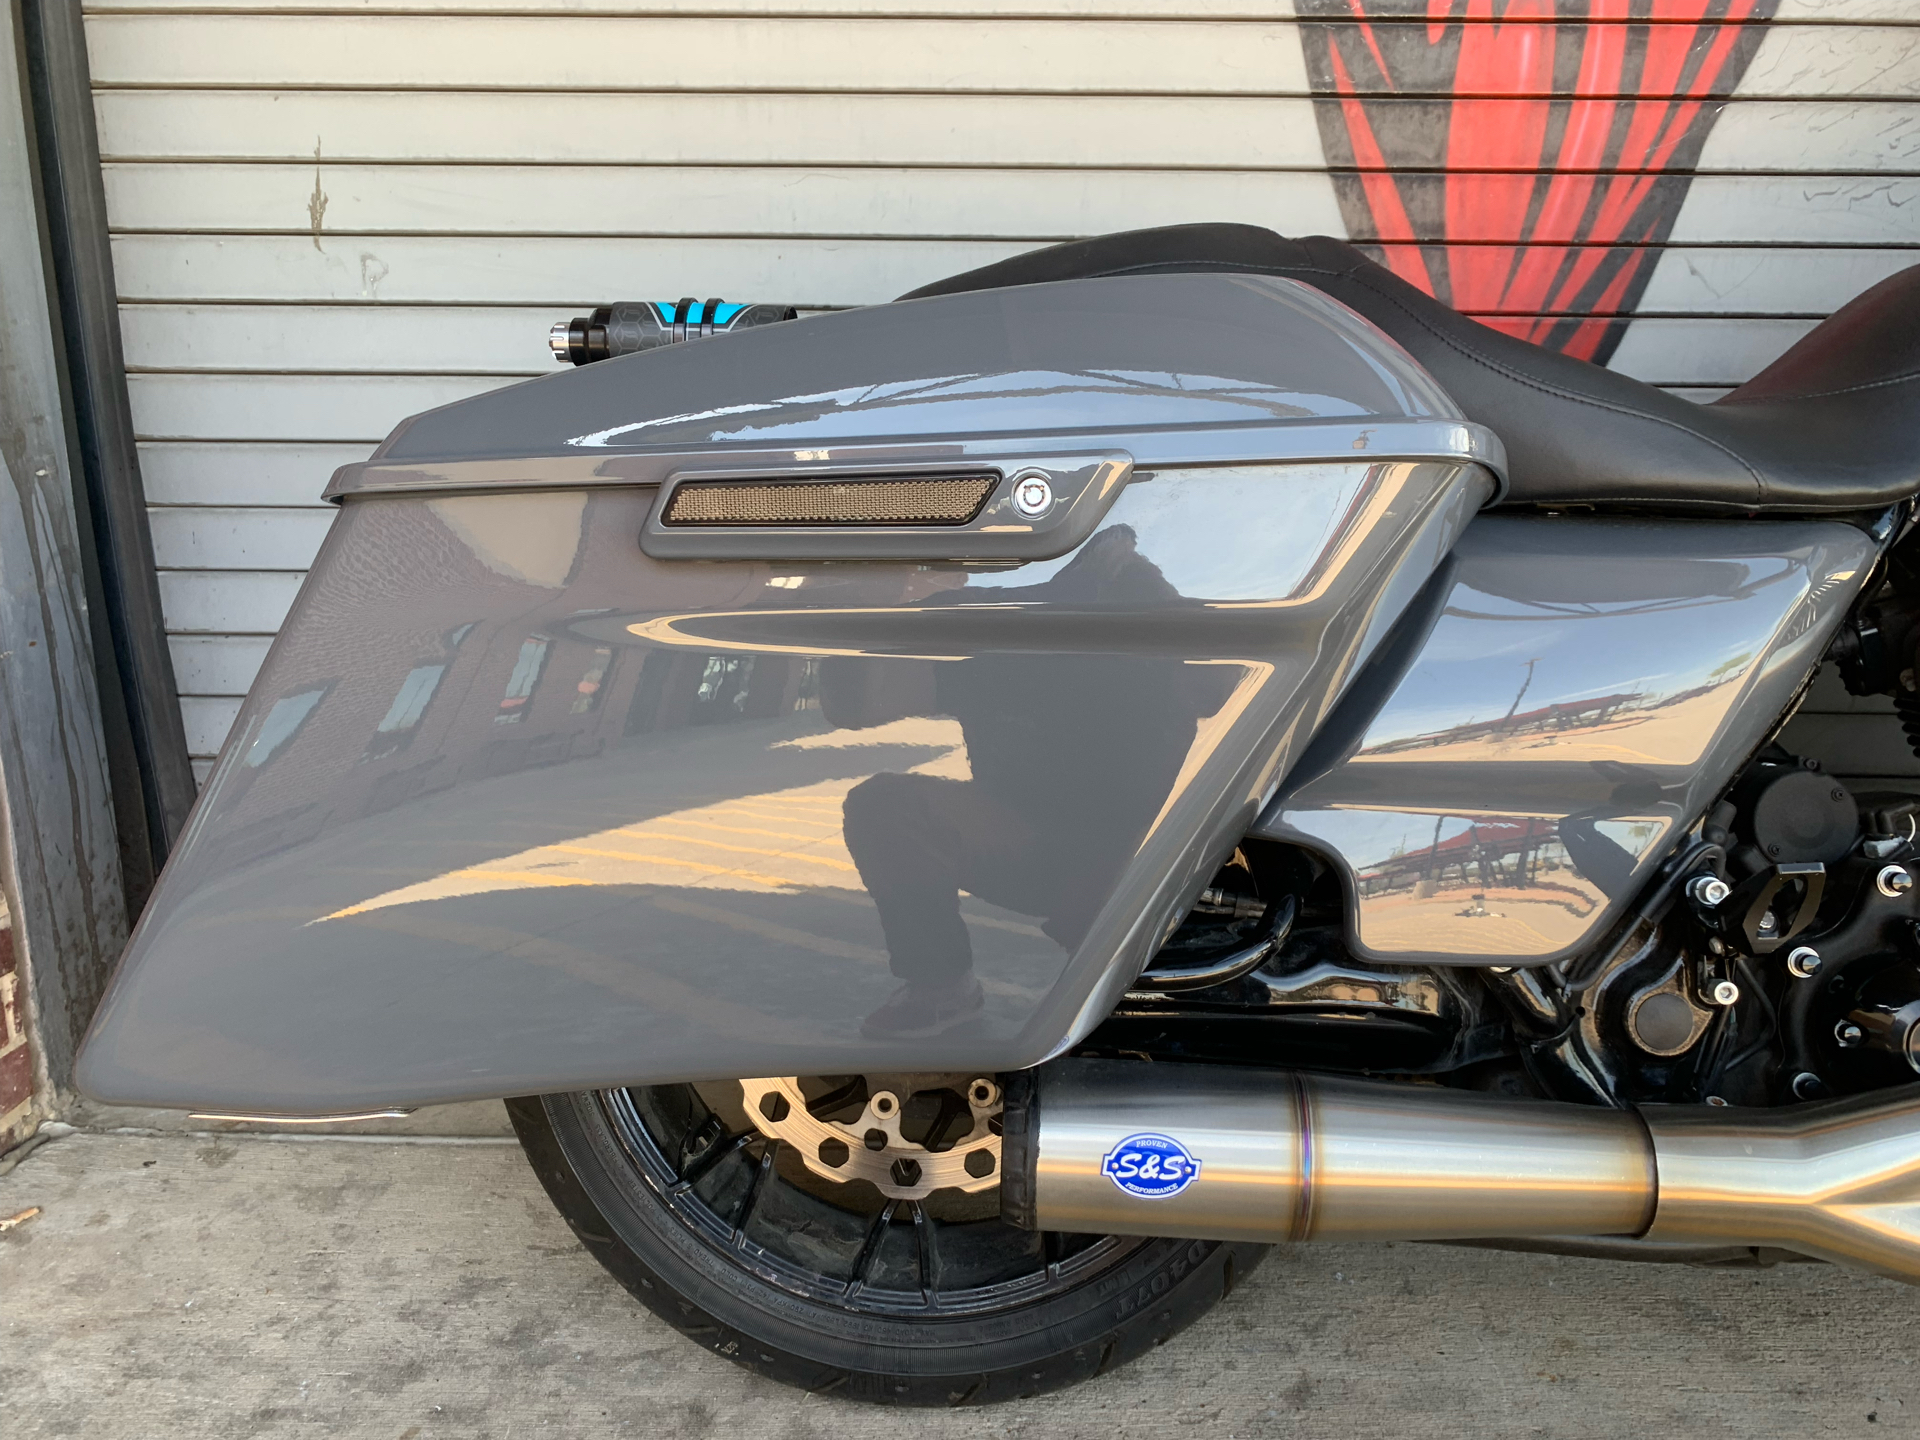 2022 Harley-Davidson Road Glide® Special in Carrollton, Texas - Photo 7